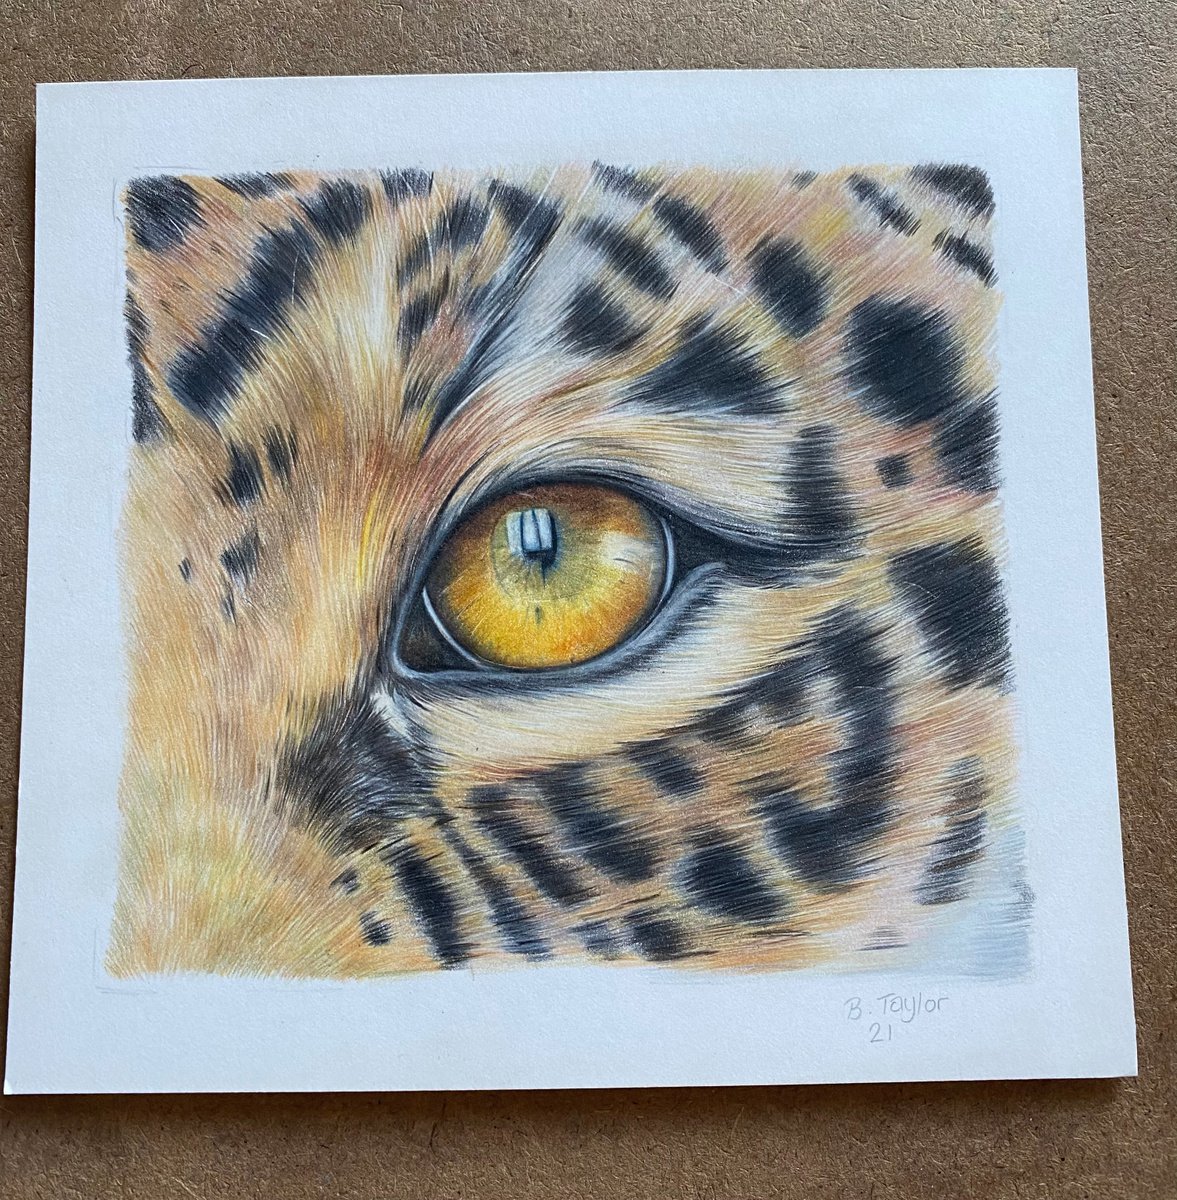 Jaguar eye study by Bethany Taylor